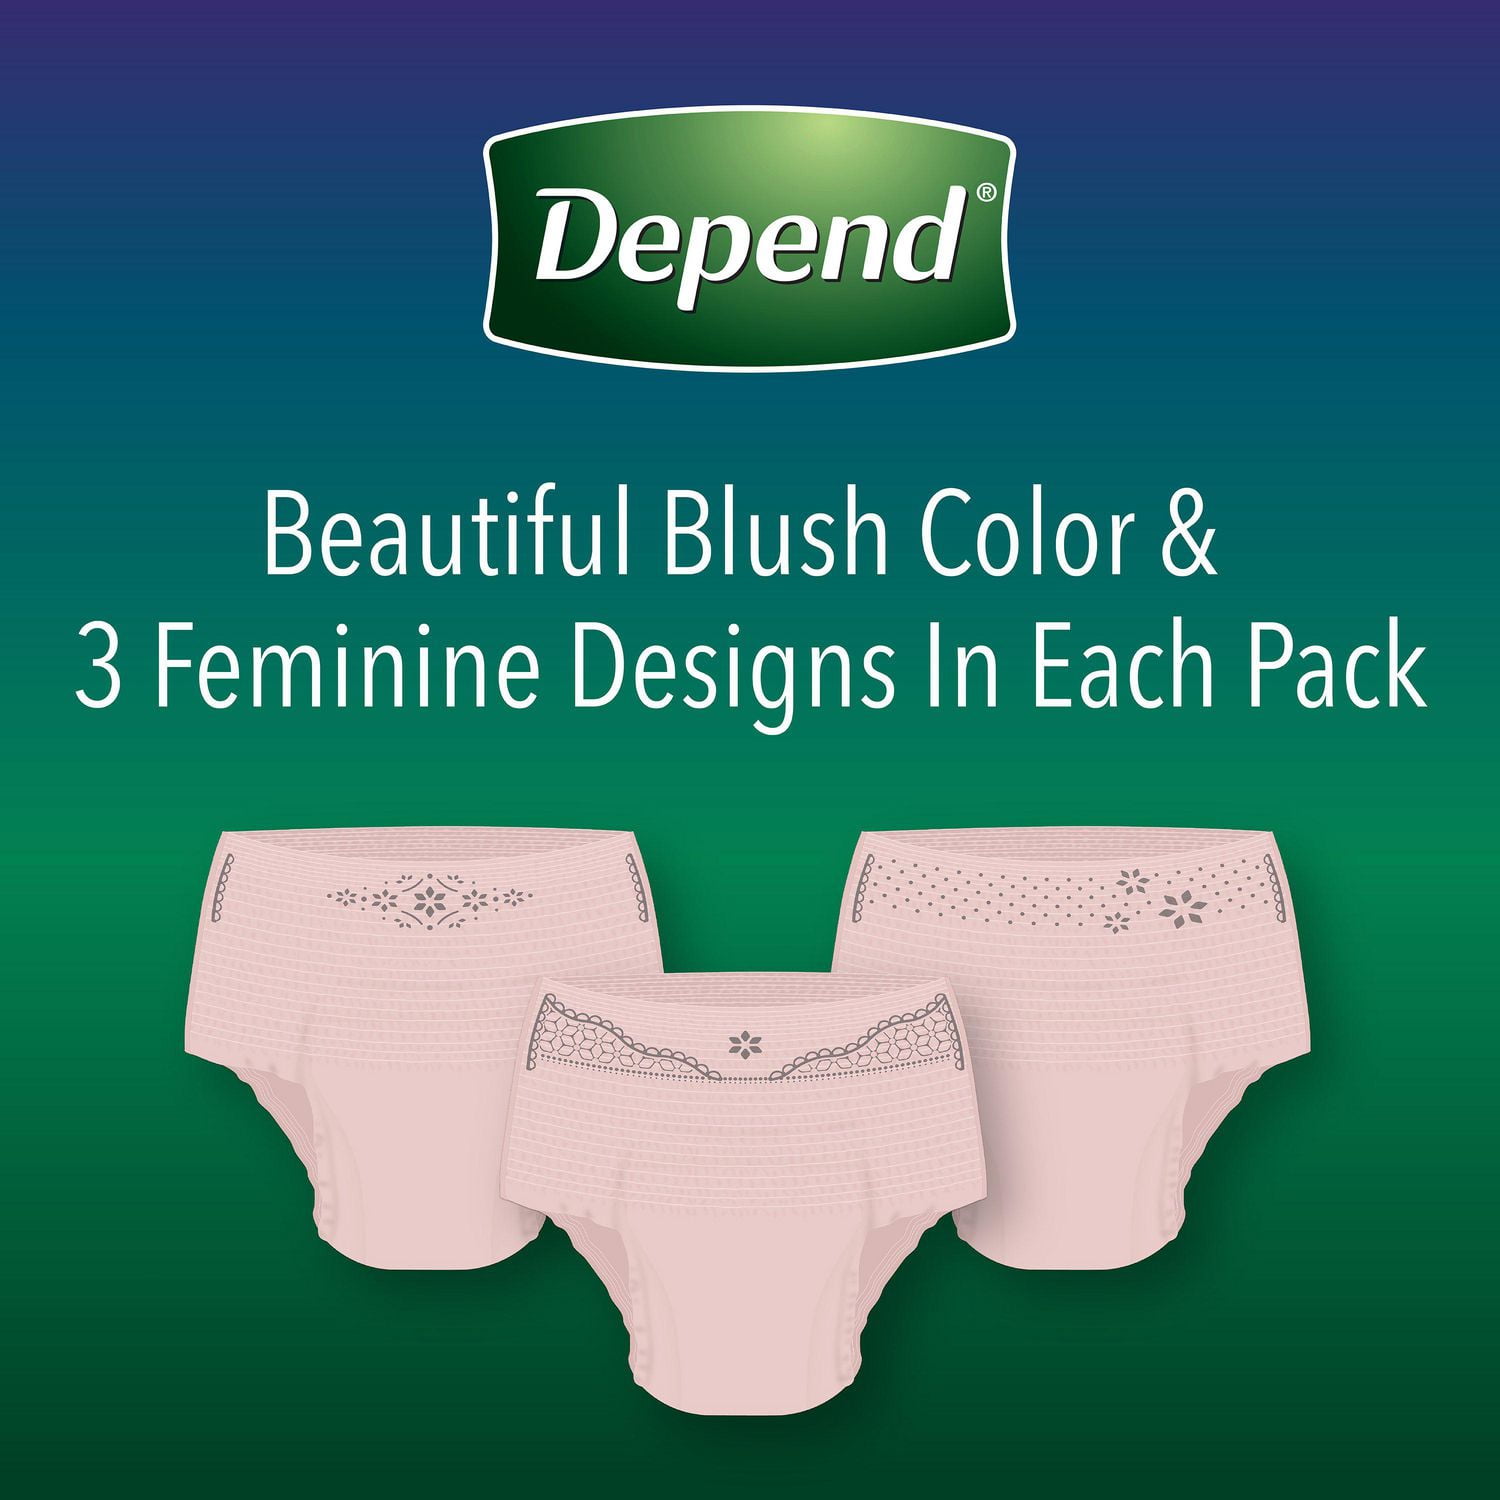 Depend Night Defense Overnight Women Extra Large Underwear 12 ct